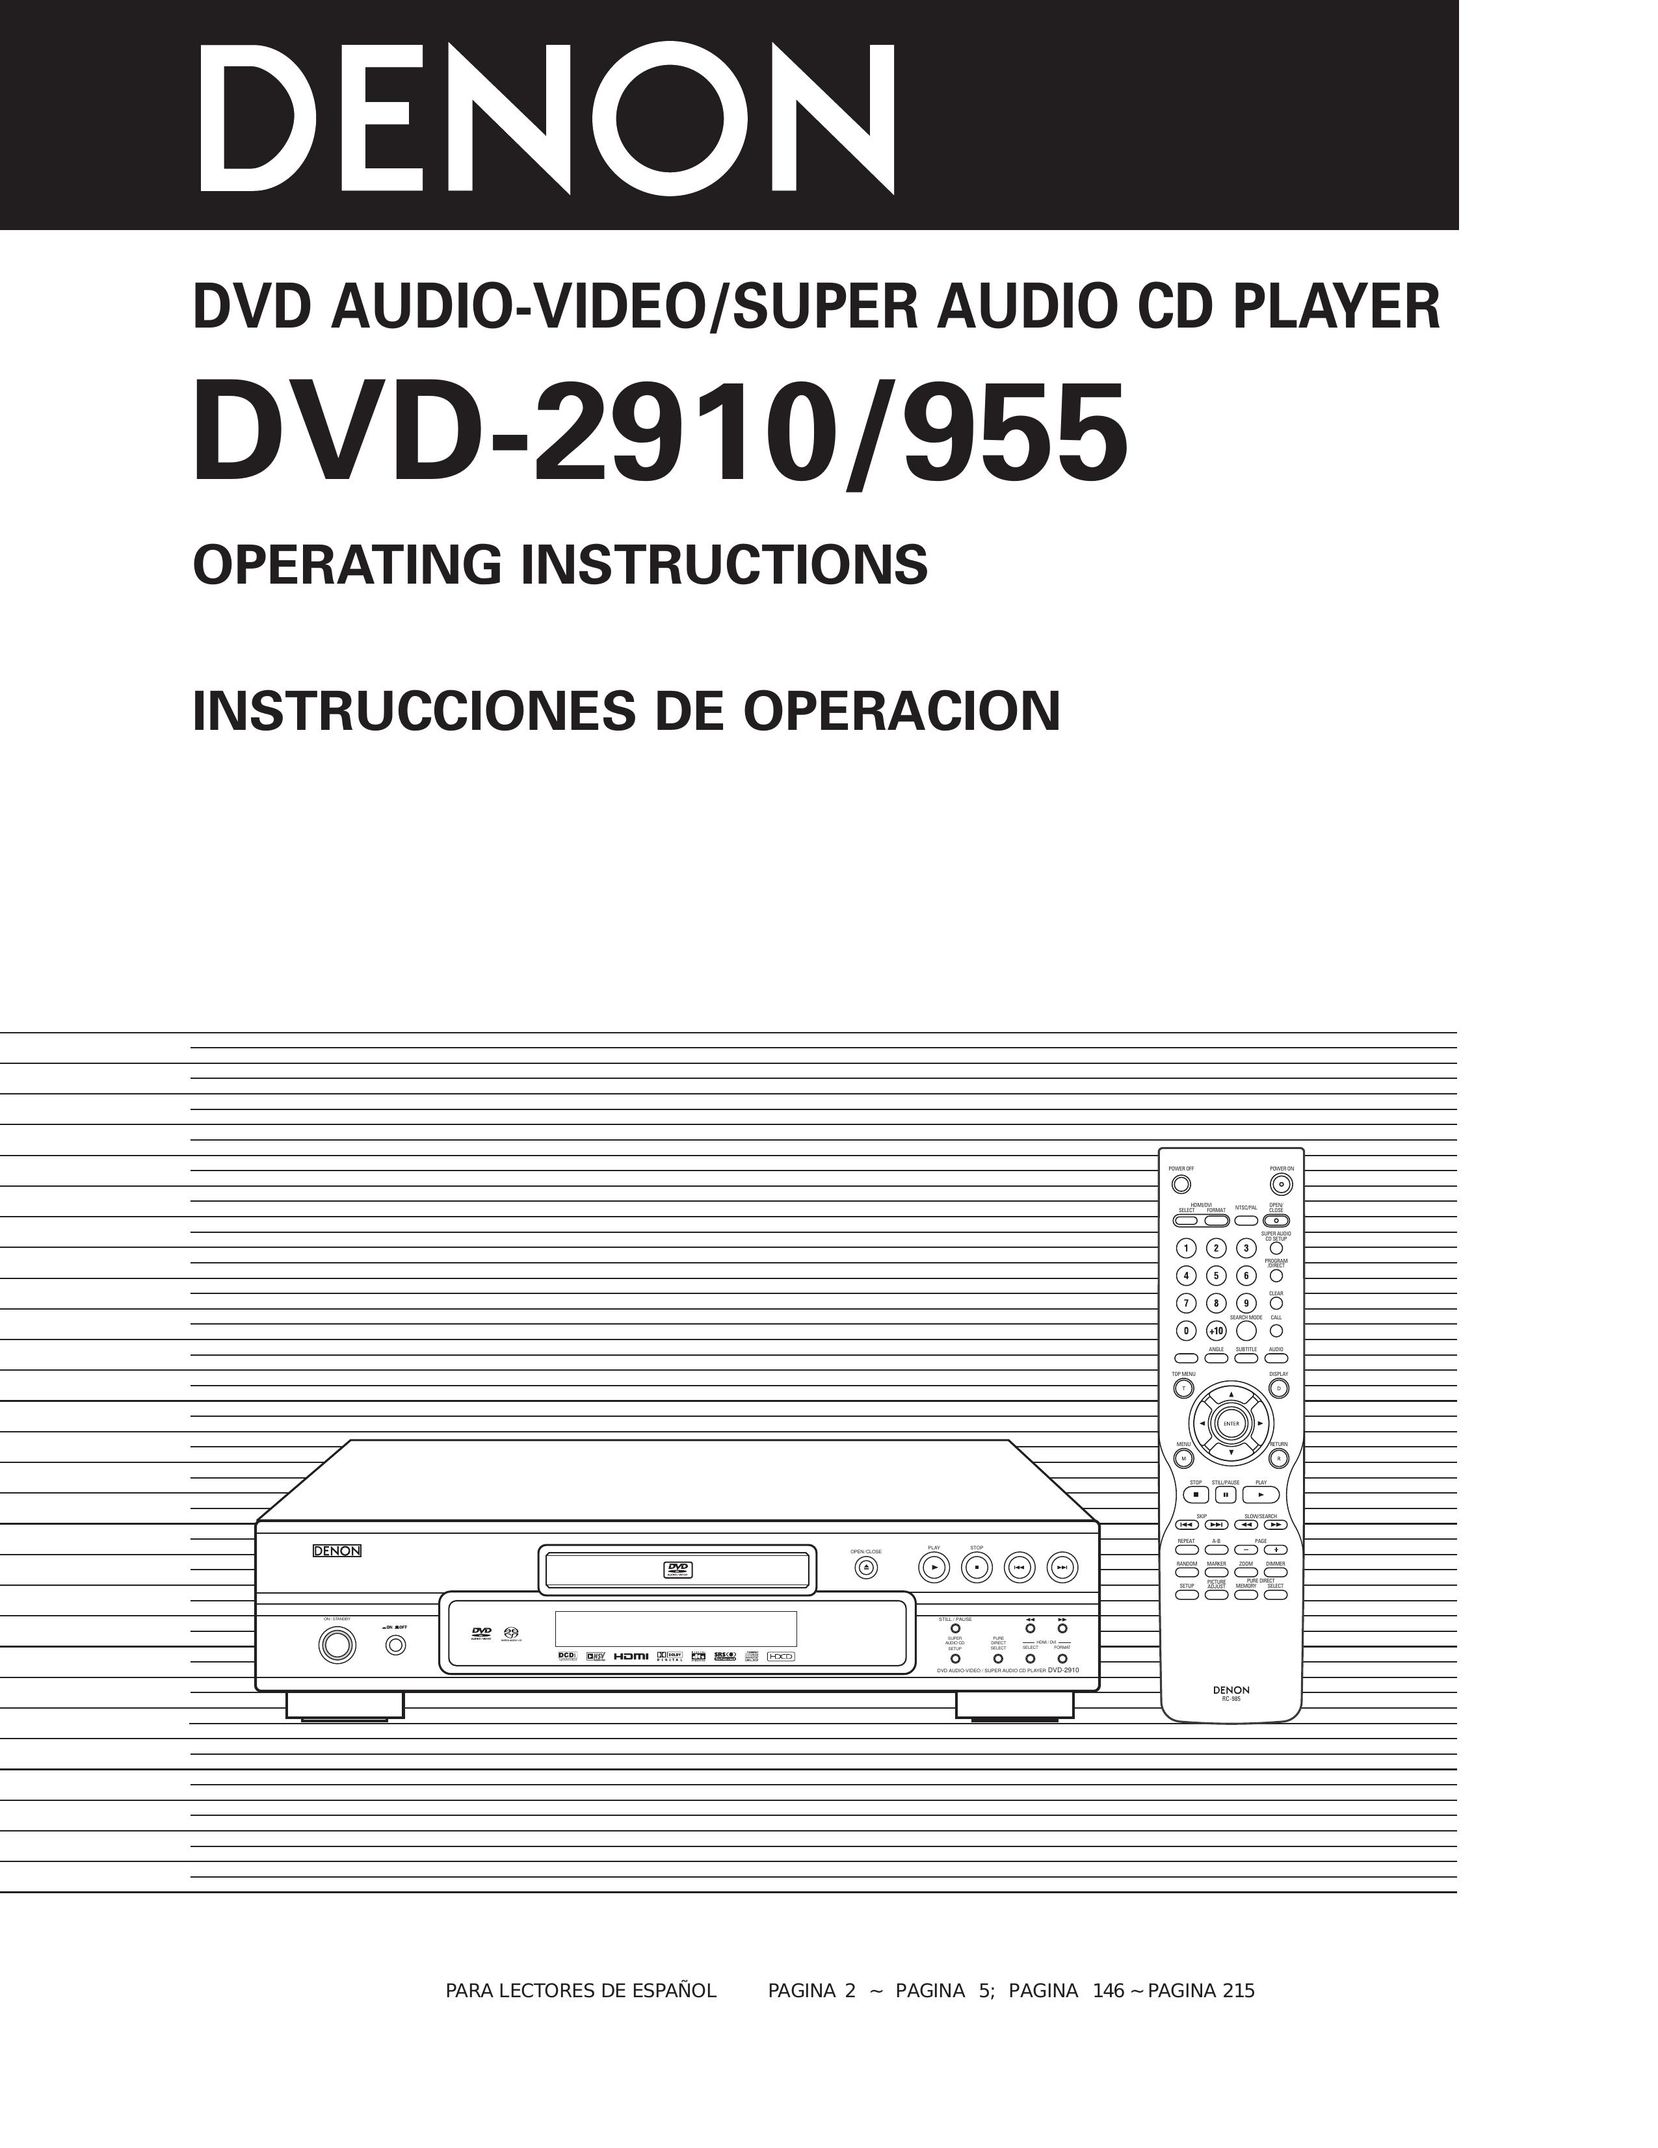 Denon DVD-2910/955 DVD Player User Manual